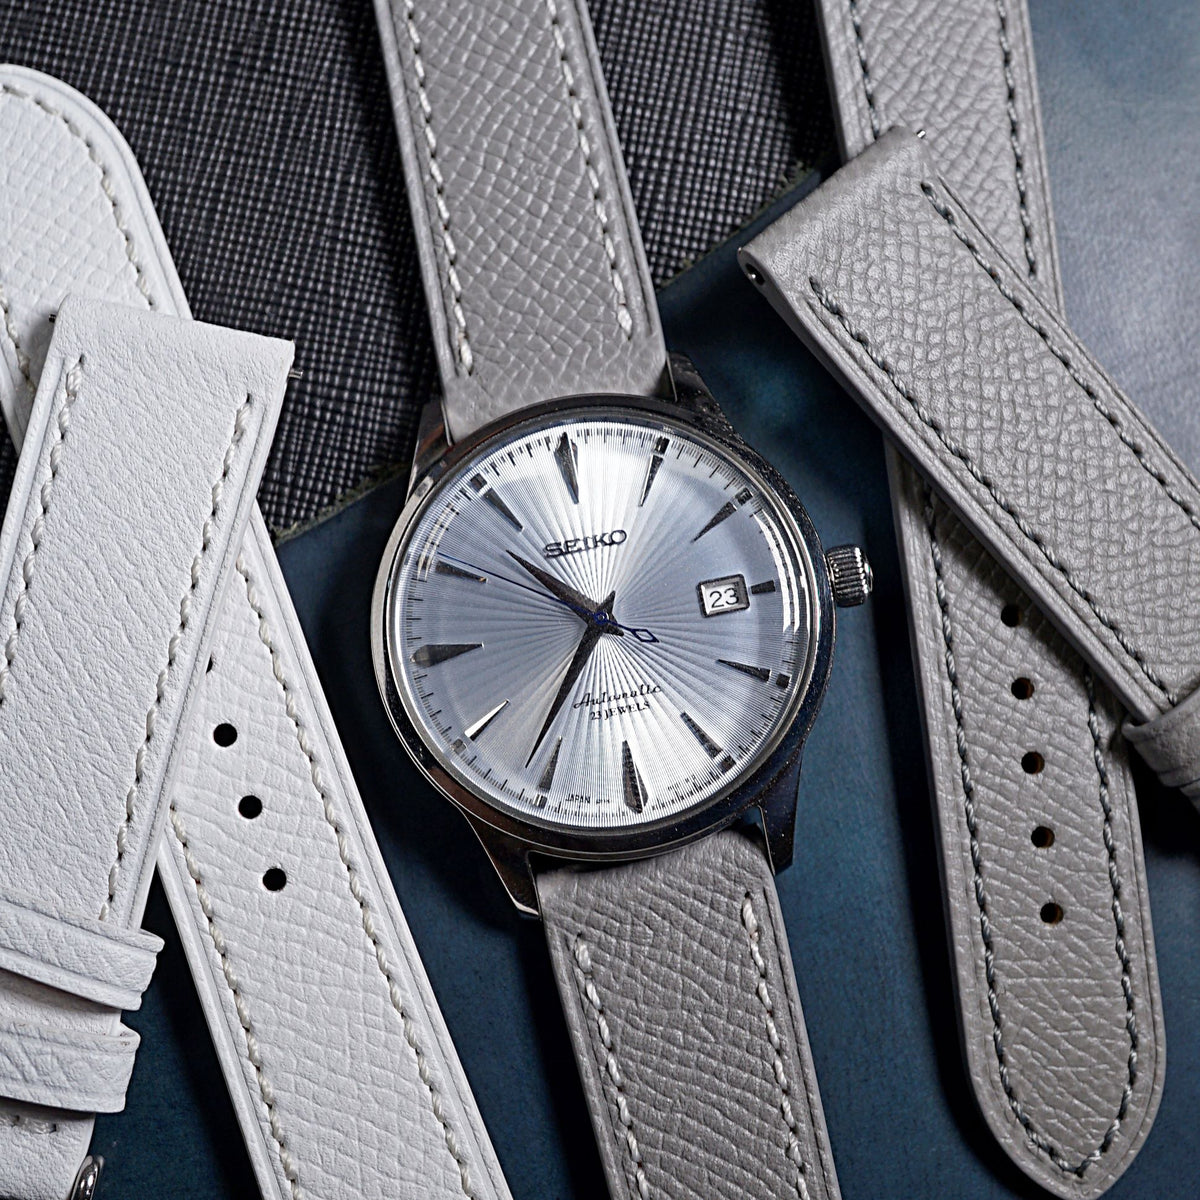 Dress Epsom Leather Strap in Grey w/ White Stitching - Nomad Watch Works MY